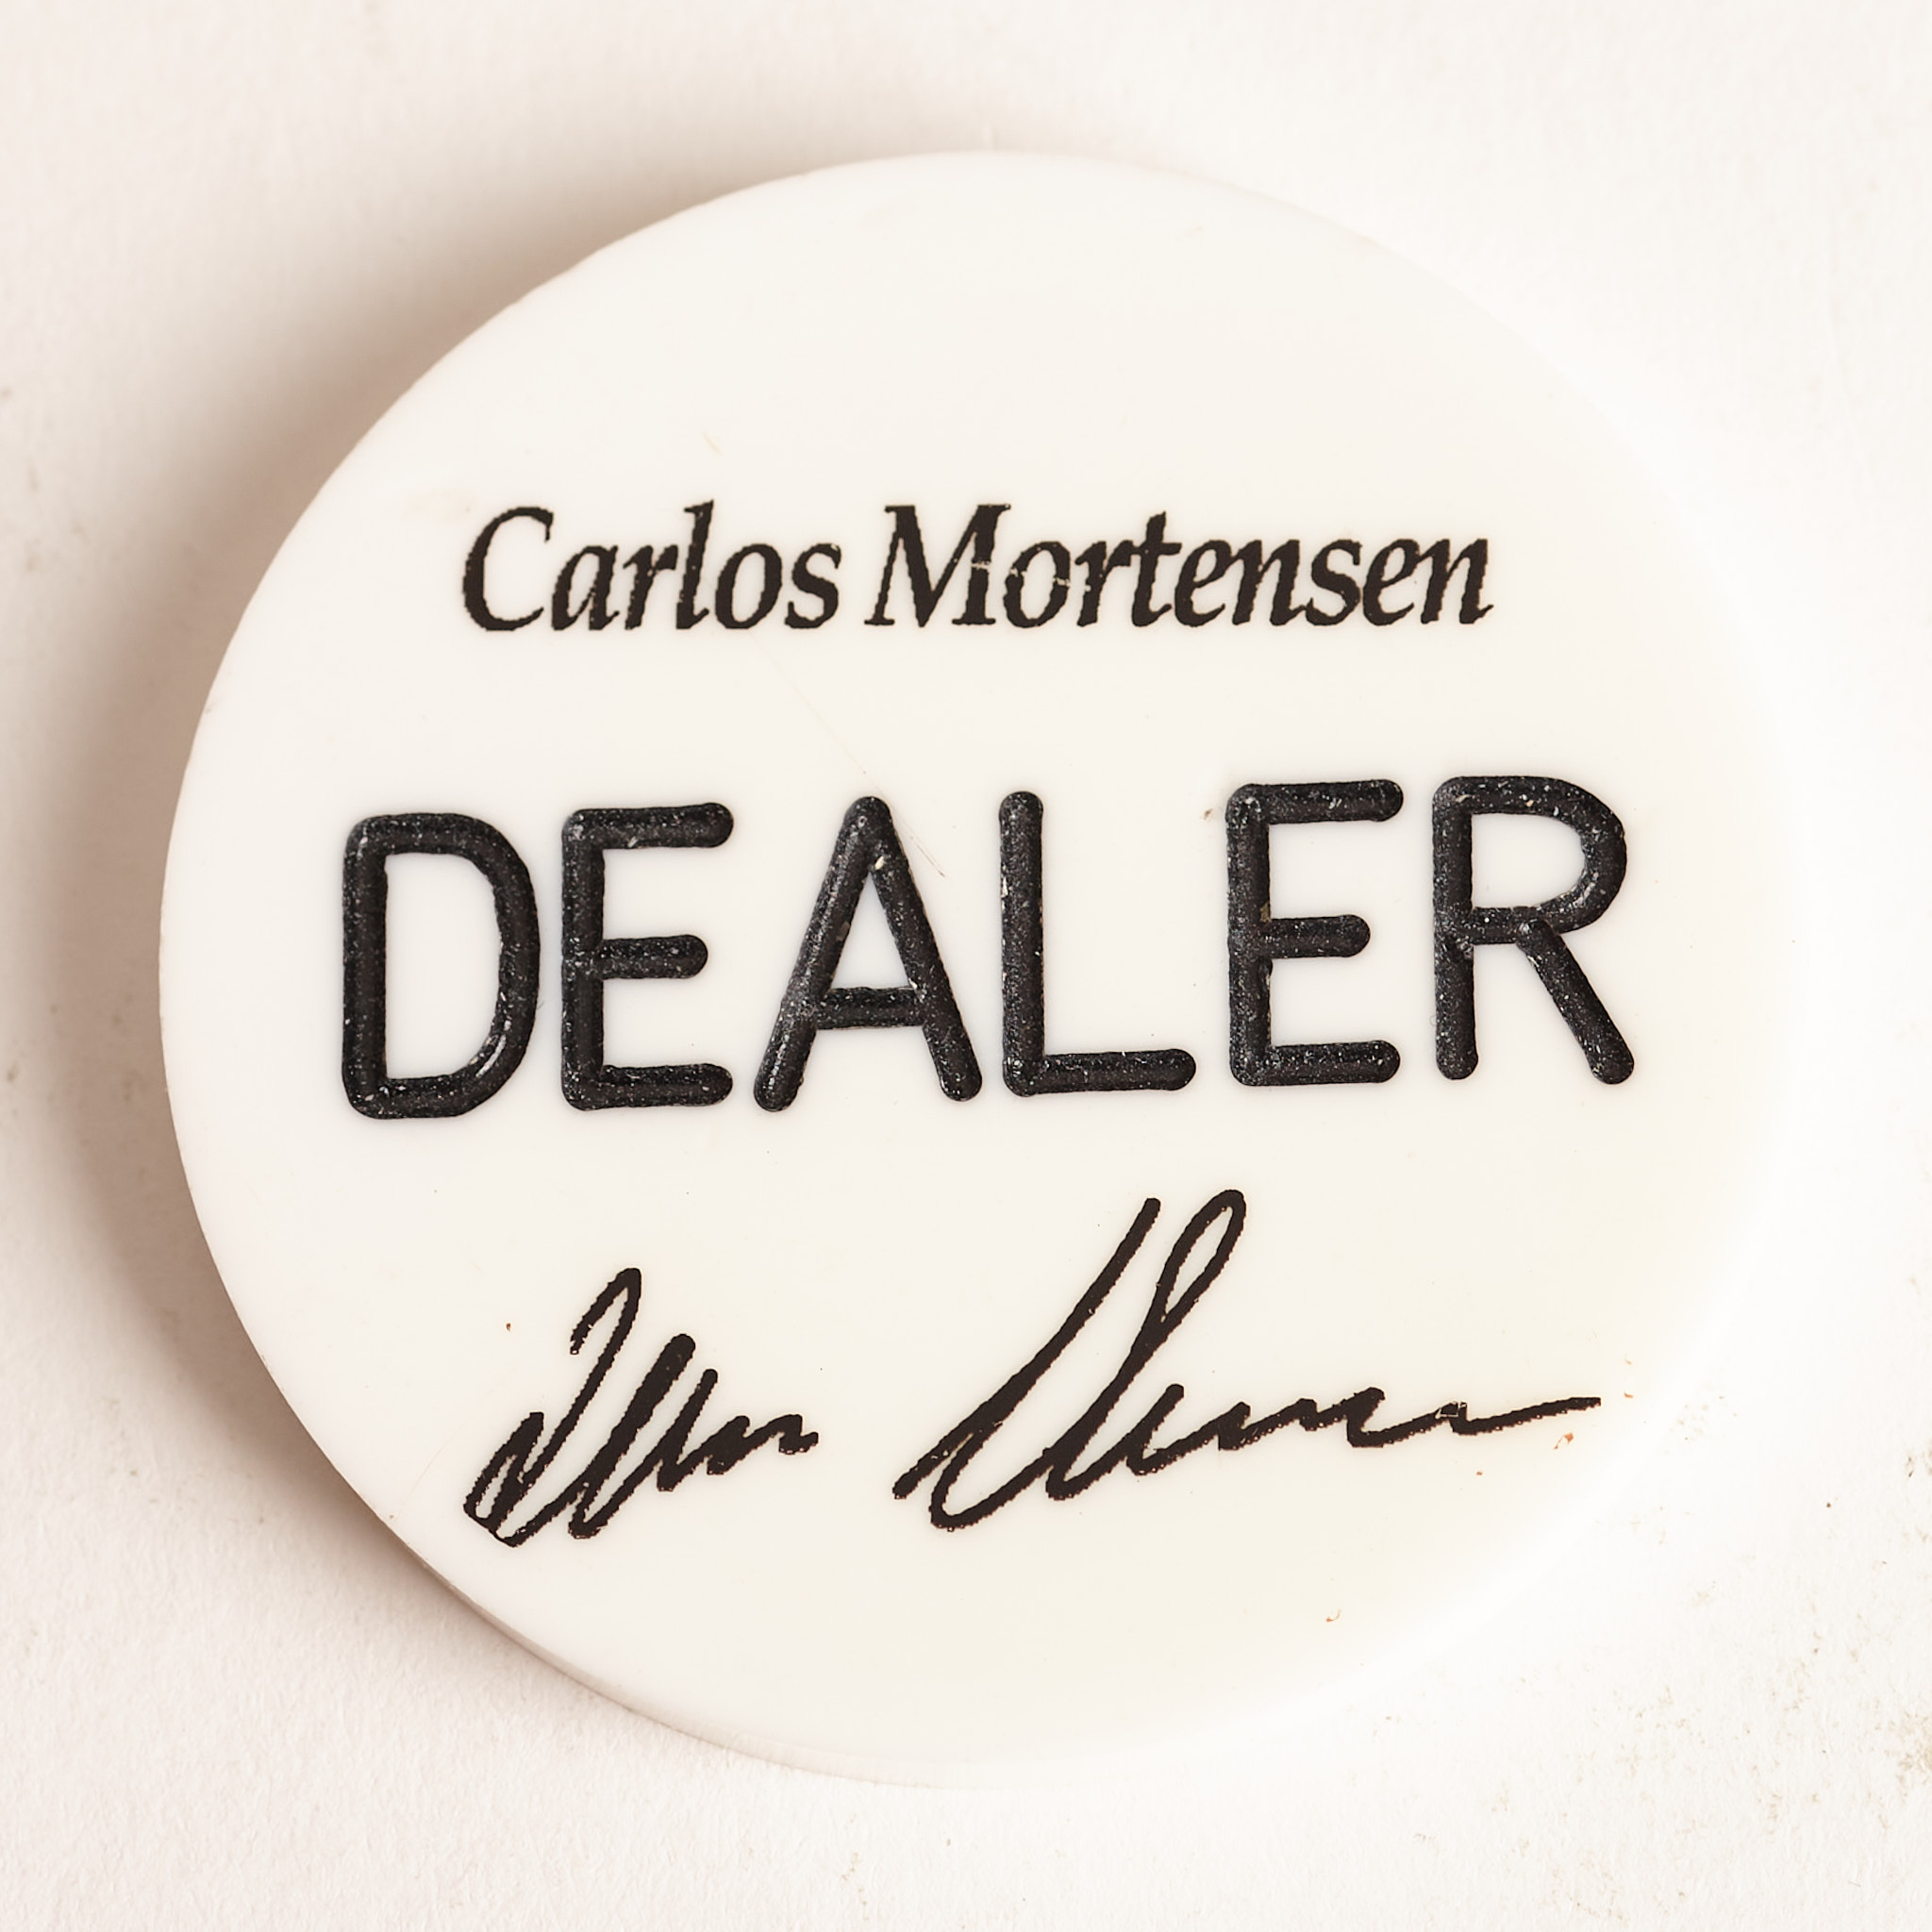 CARLOS MORTENSEN, “THE MATADOR”, WORLD SERIES OF POKER CHAMPION, Poker Dealer Button